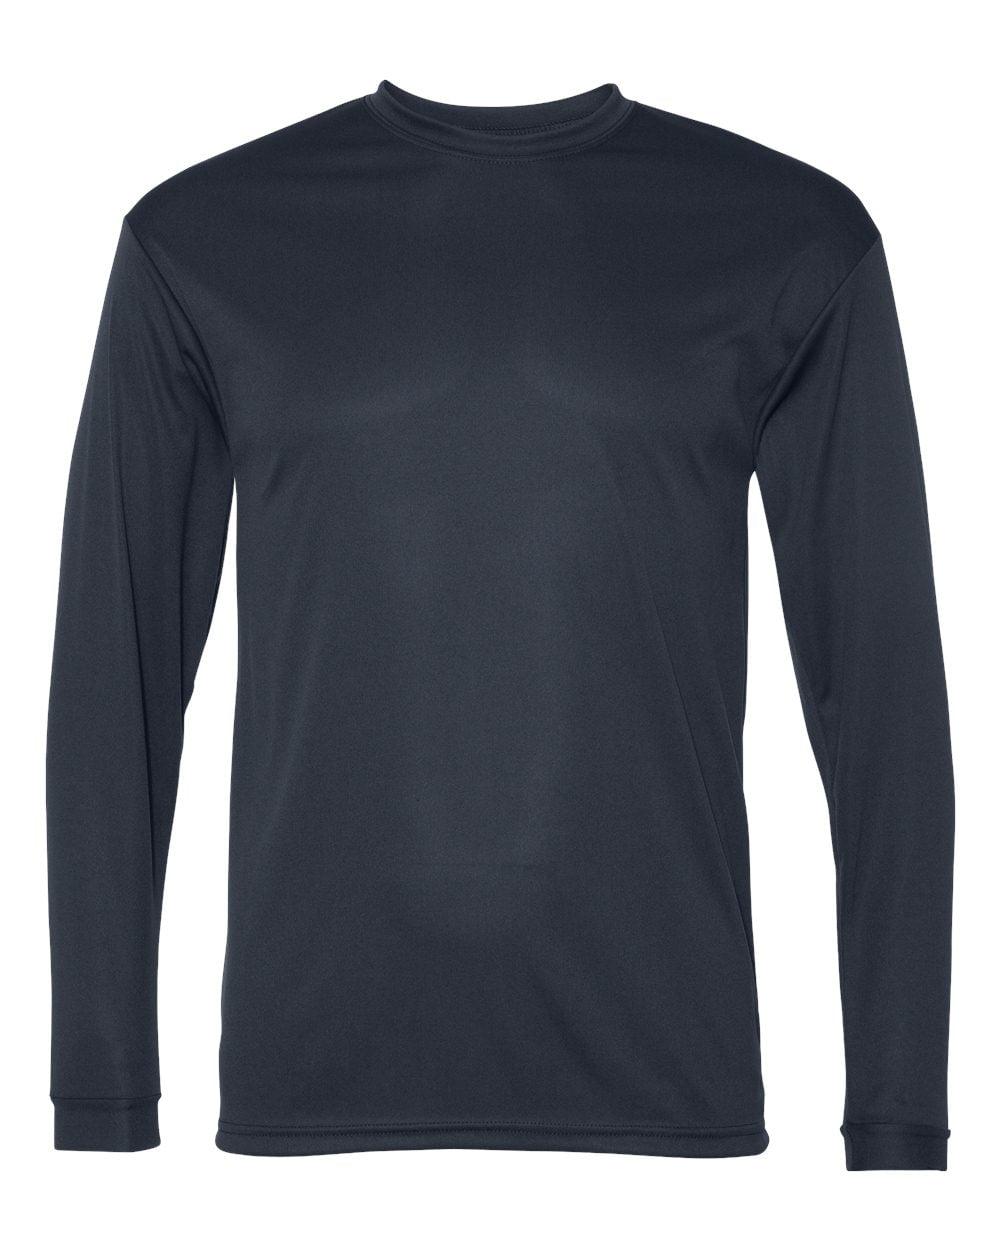 Short & Long Sleeve, Mens/Ladies/Youth Sizes Badger Sport C2 Performance Wicking Athletic Shirt/Undershirt Jersey Tee